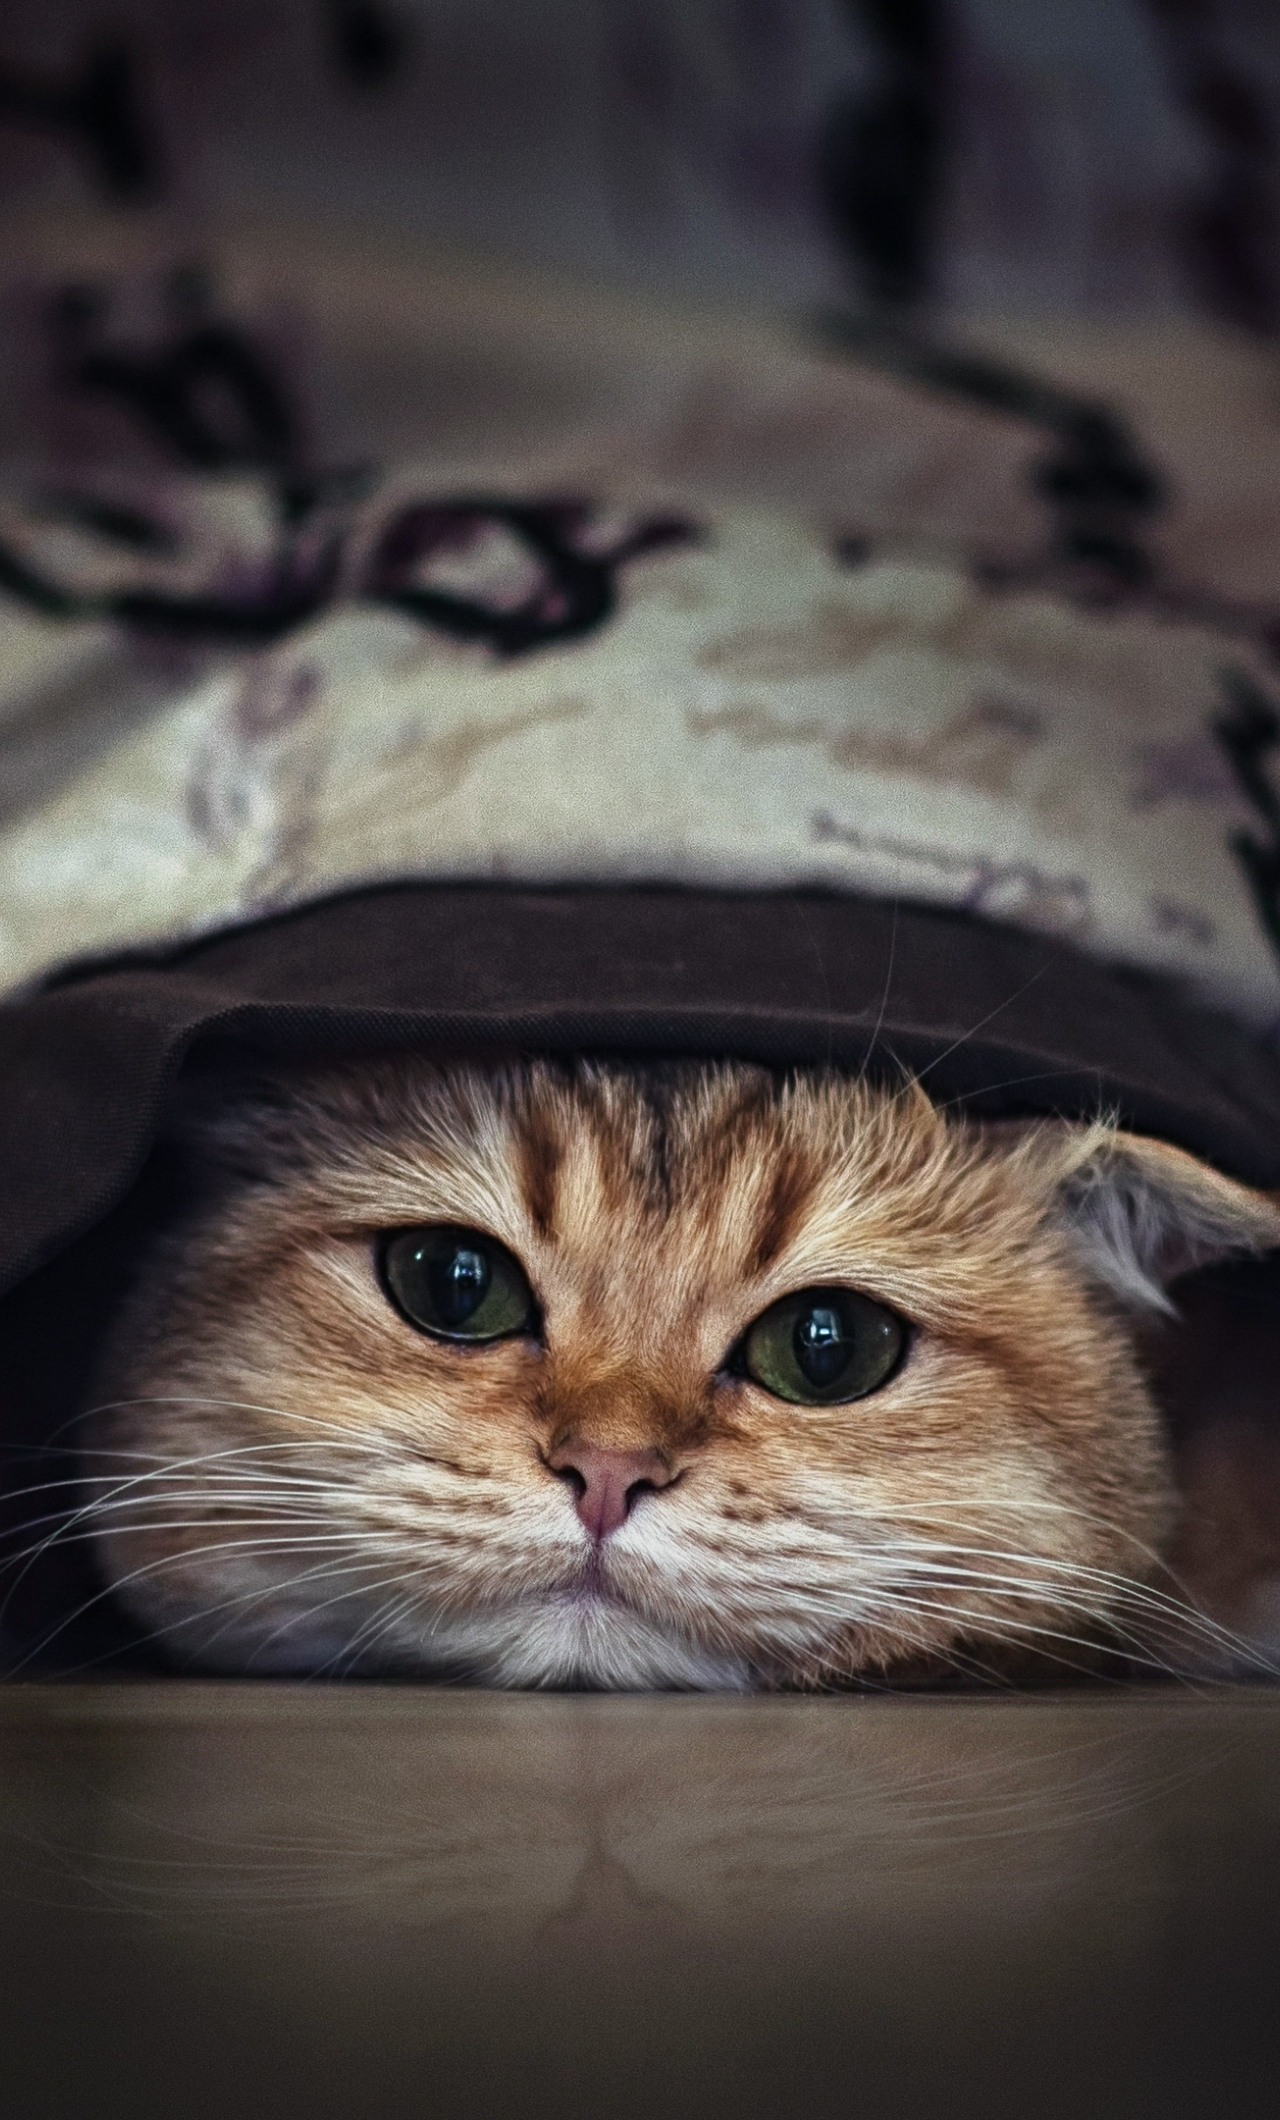 Download wallpaper 1280x2120 cute, feline, cat, iphone 6 plus, 1280x2120 hd  background, 24776